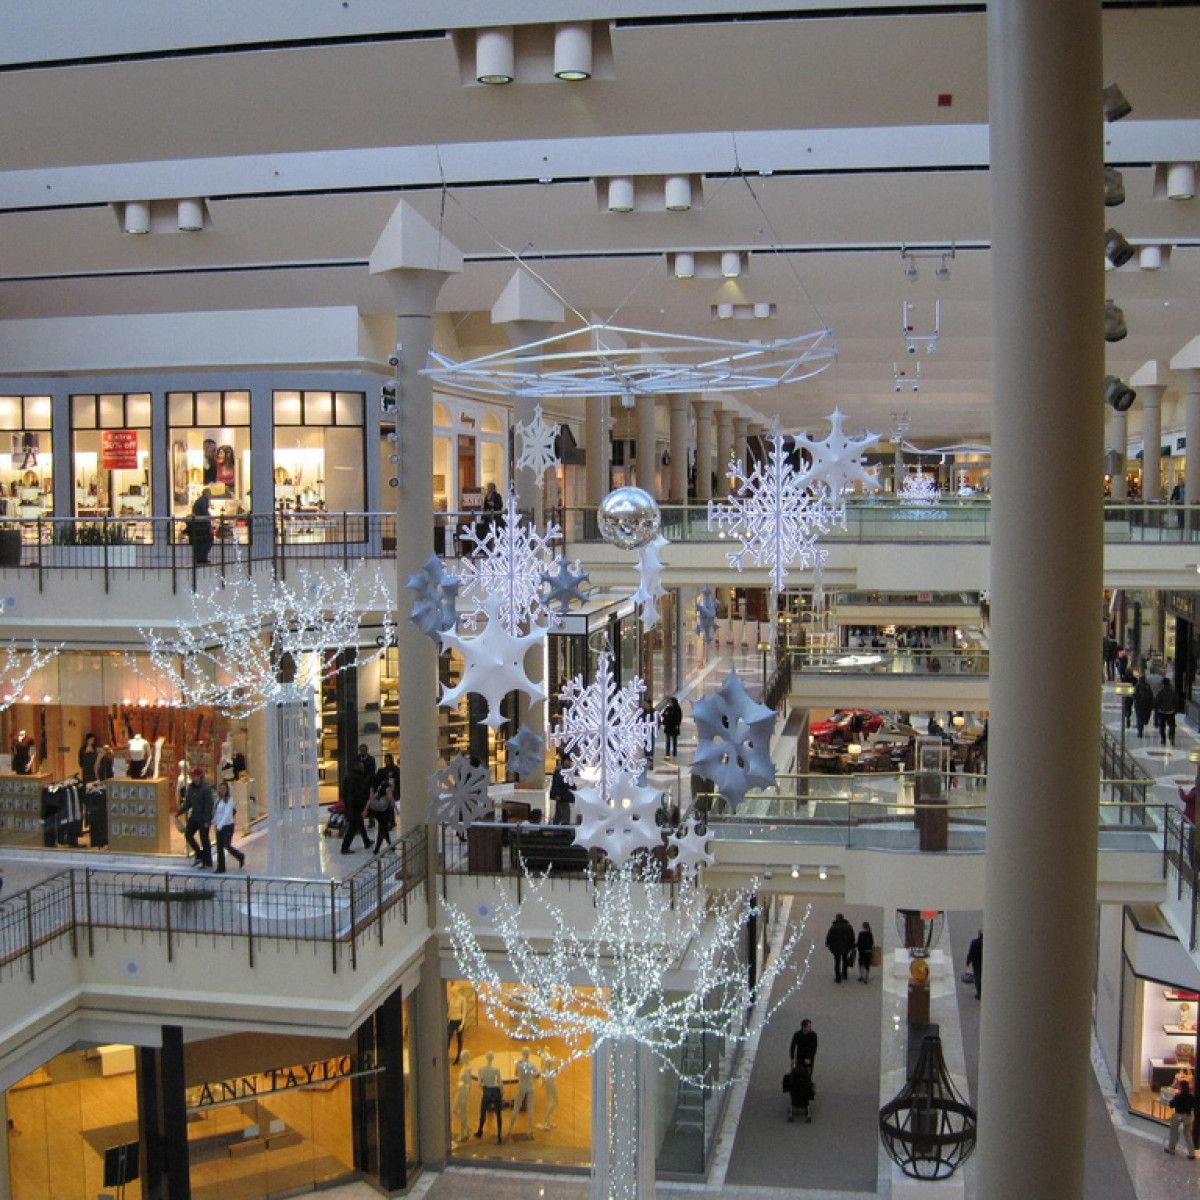 Tysons Galleria / Shopping Mall in McLean, VA USA 